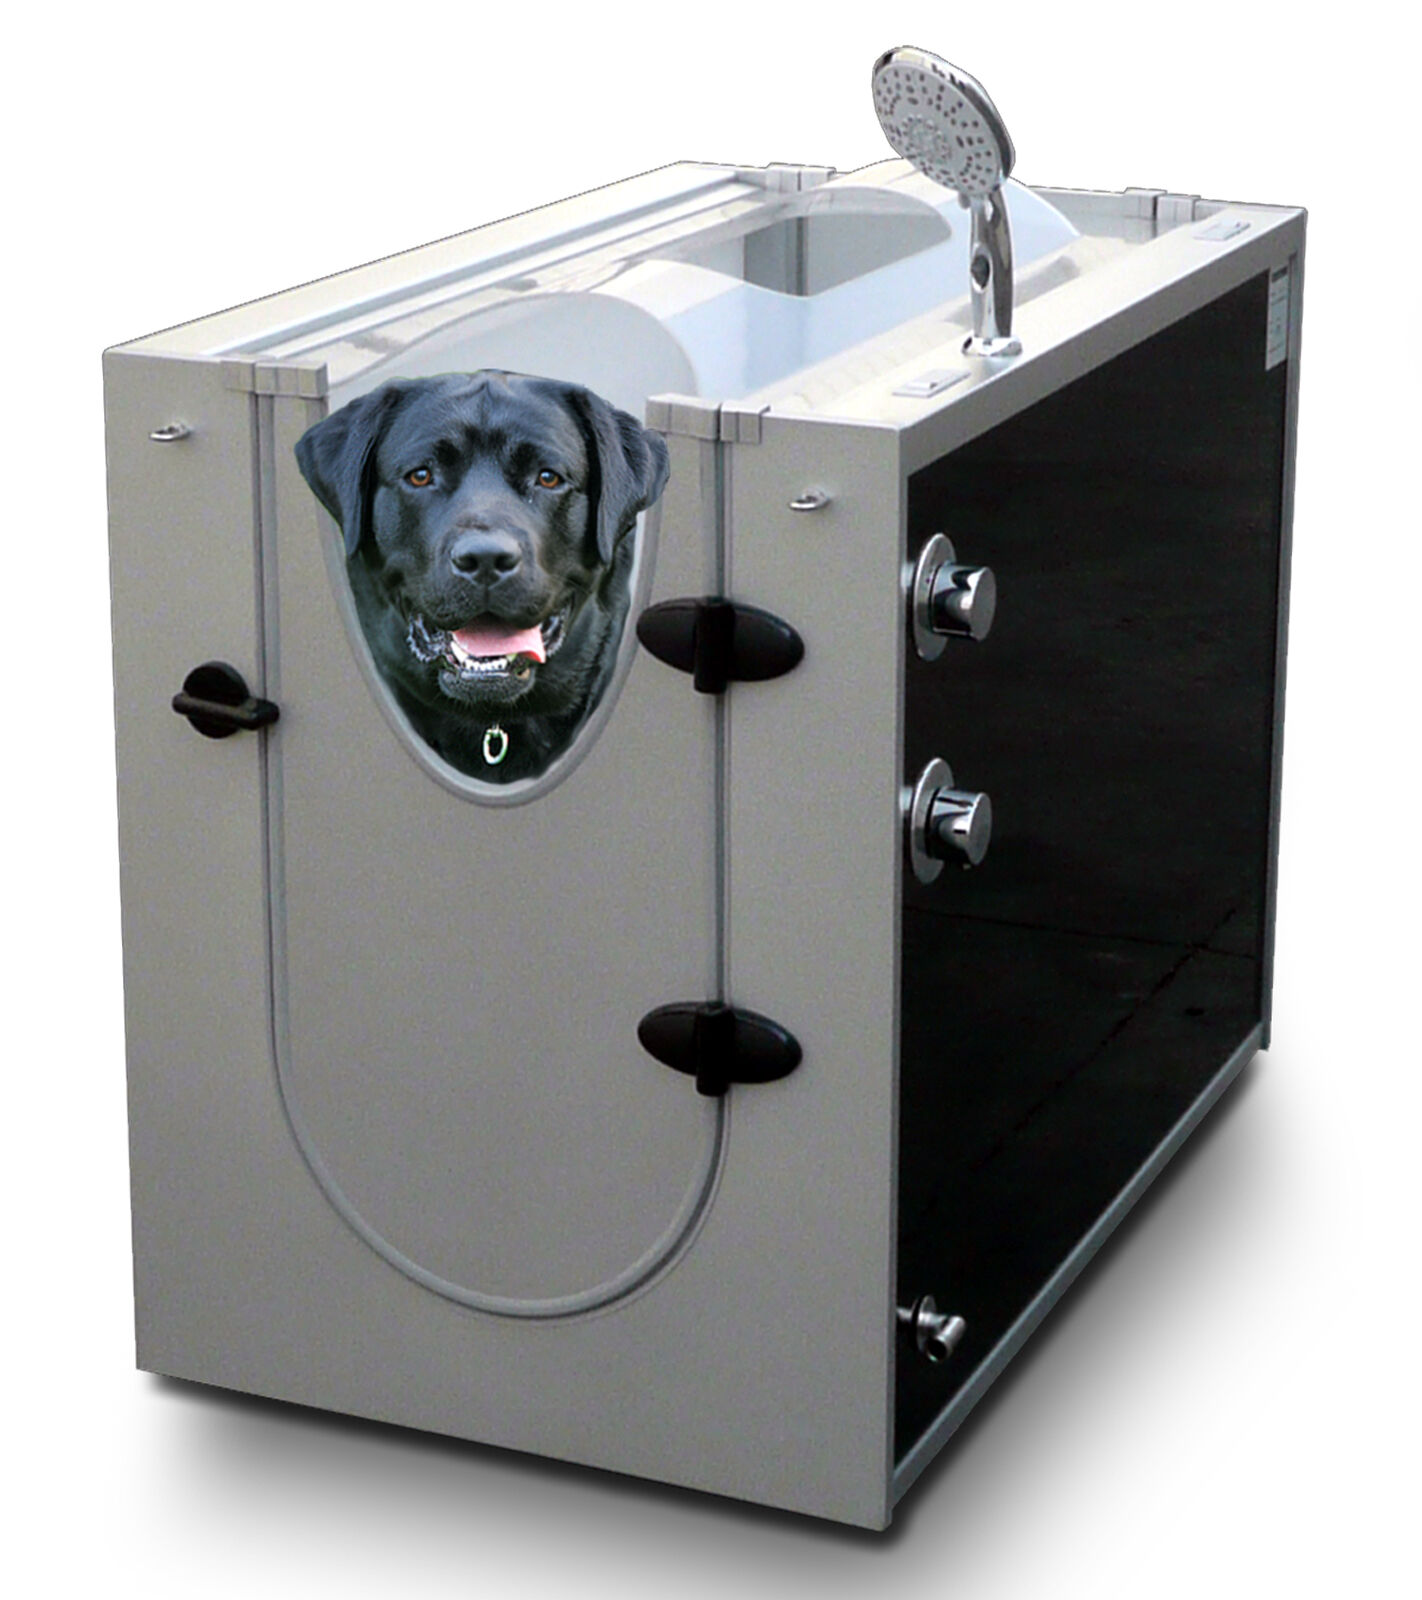 PORTABLE DOG SPA ENCLOSURE BATH TUB SHOWER WASH FOR HOME PET OUTDOOR